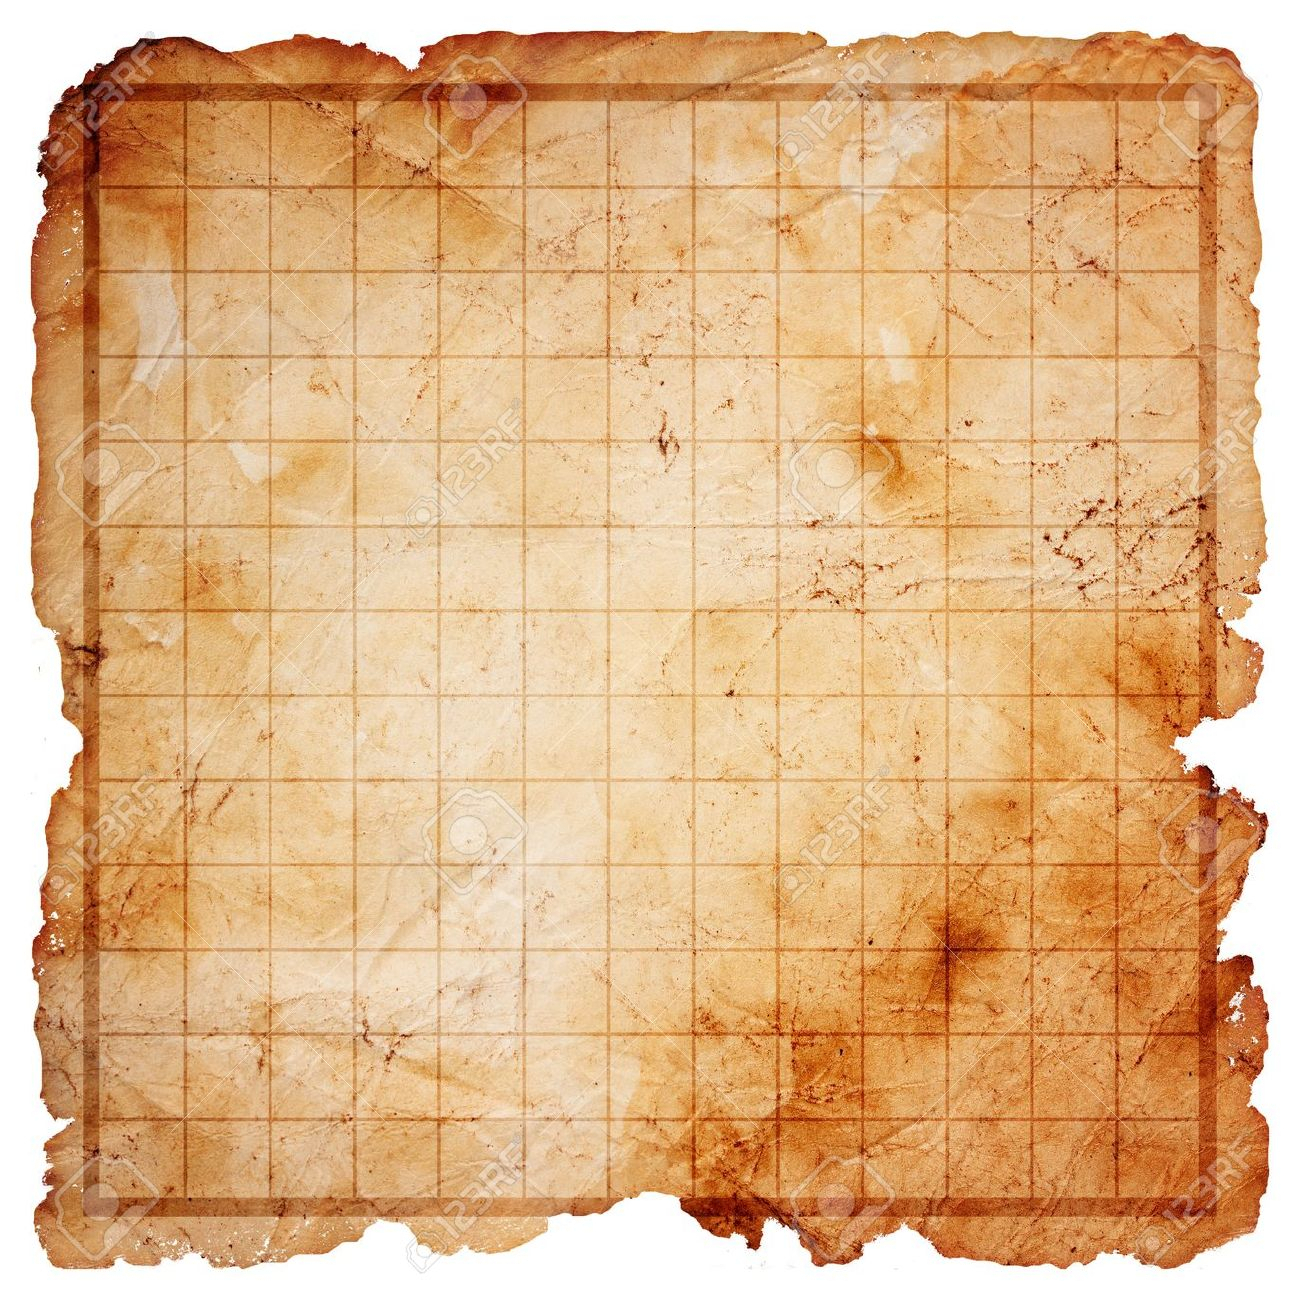 Blank Pirate Treasure Map Regarding Blank Pirate Map With Blank Pirate Map Template